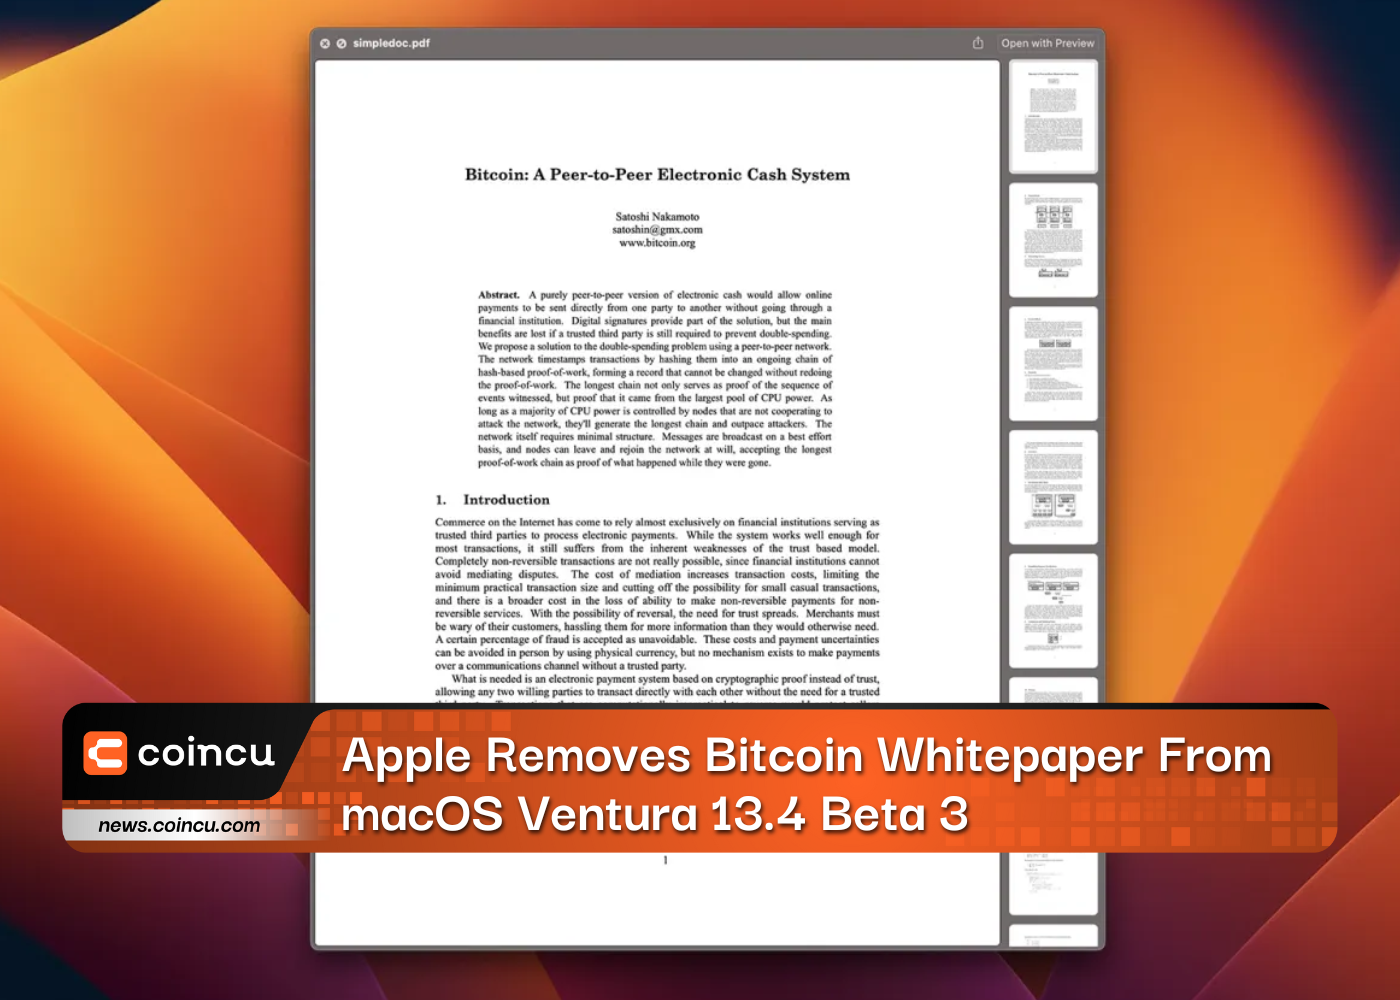 Apple Removes Bitcoin Whitepaper From macOS Ventura 13.4 Beta 3